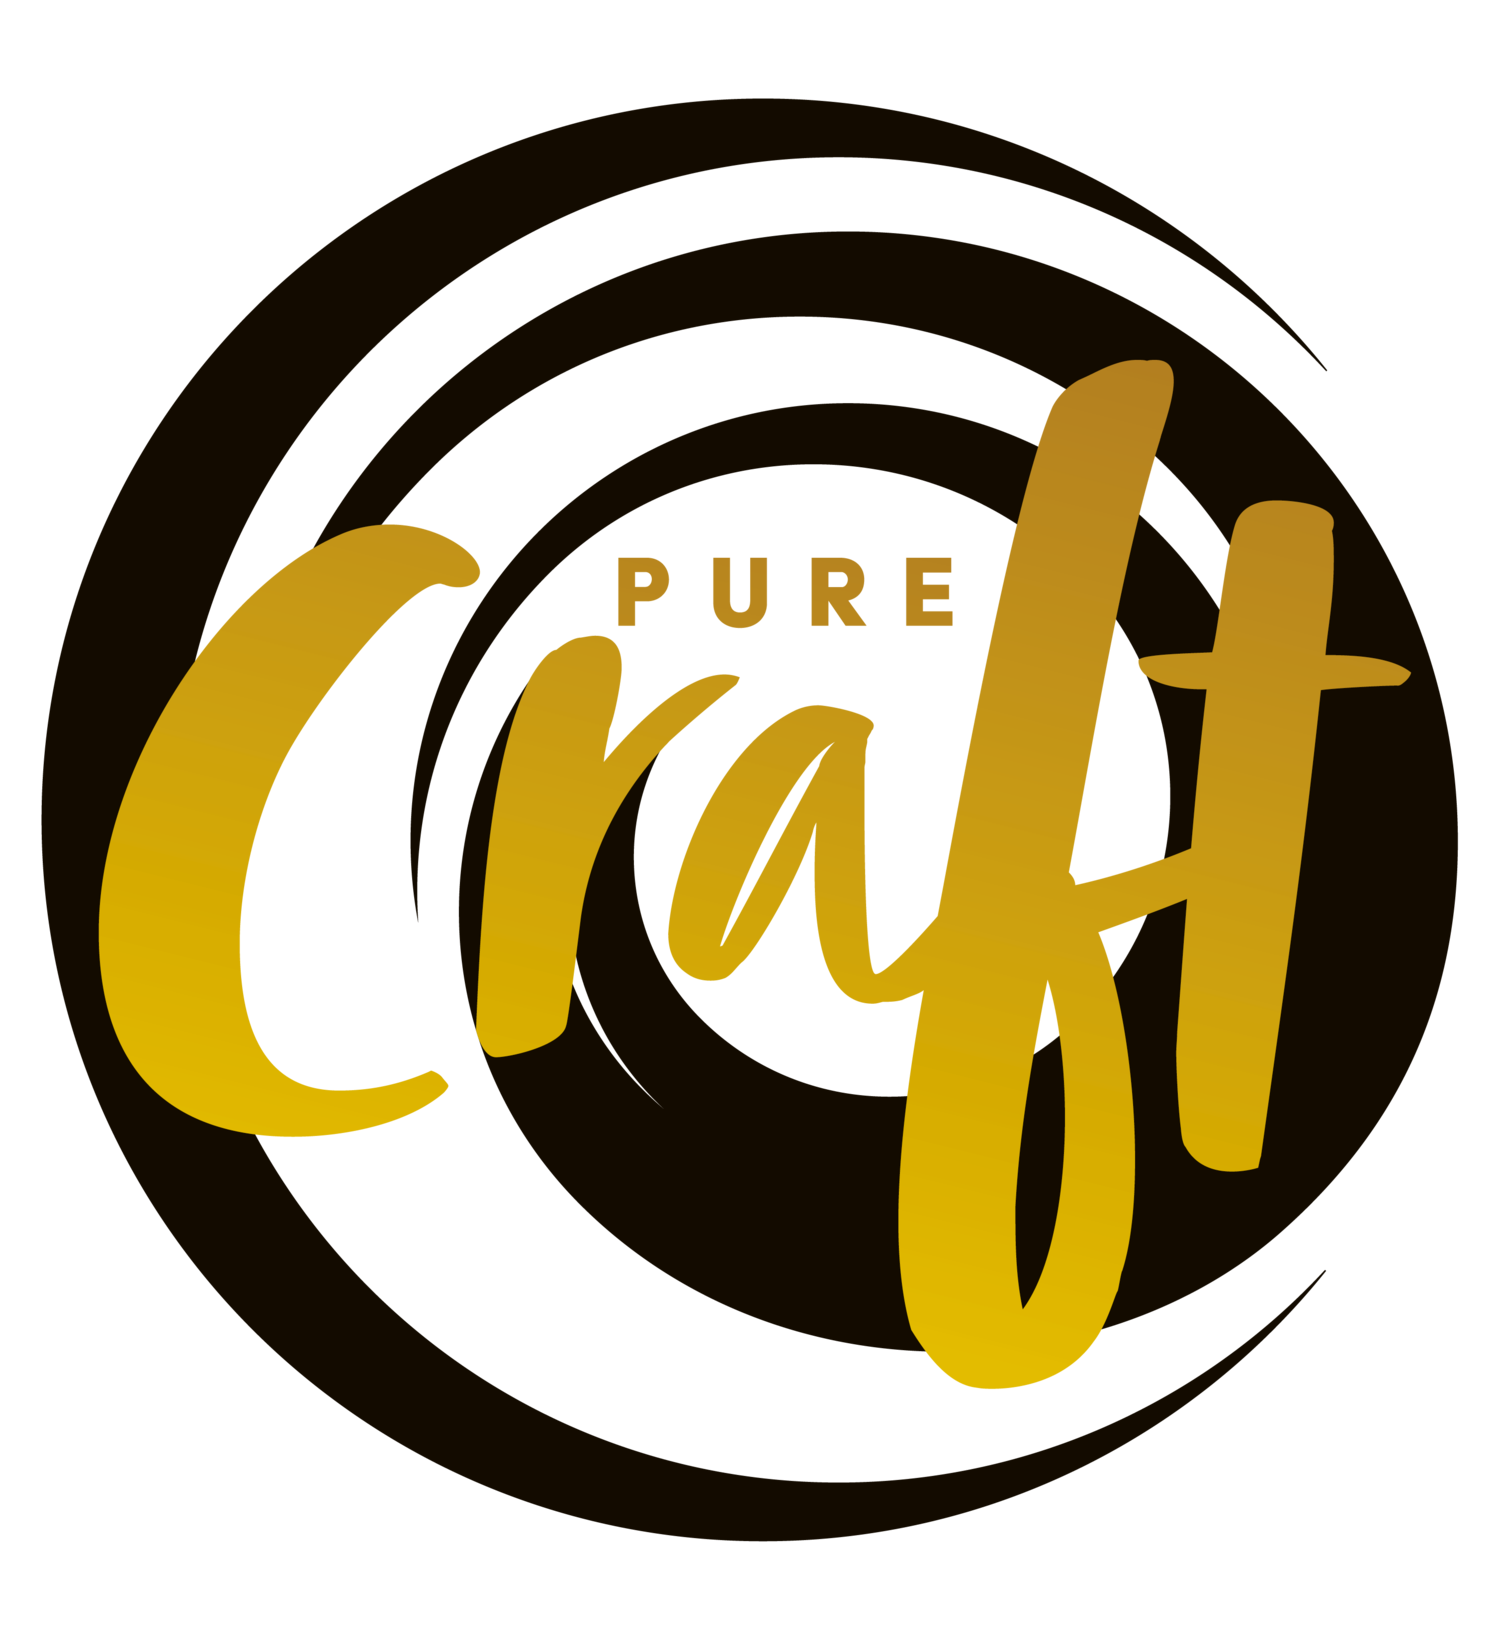 PureCraft